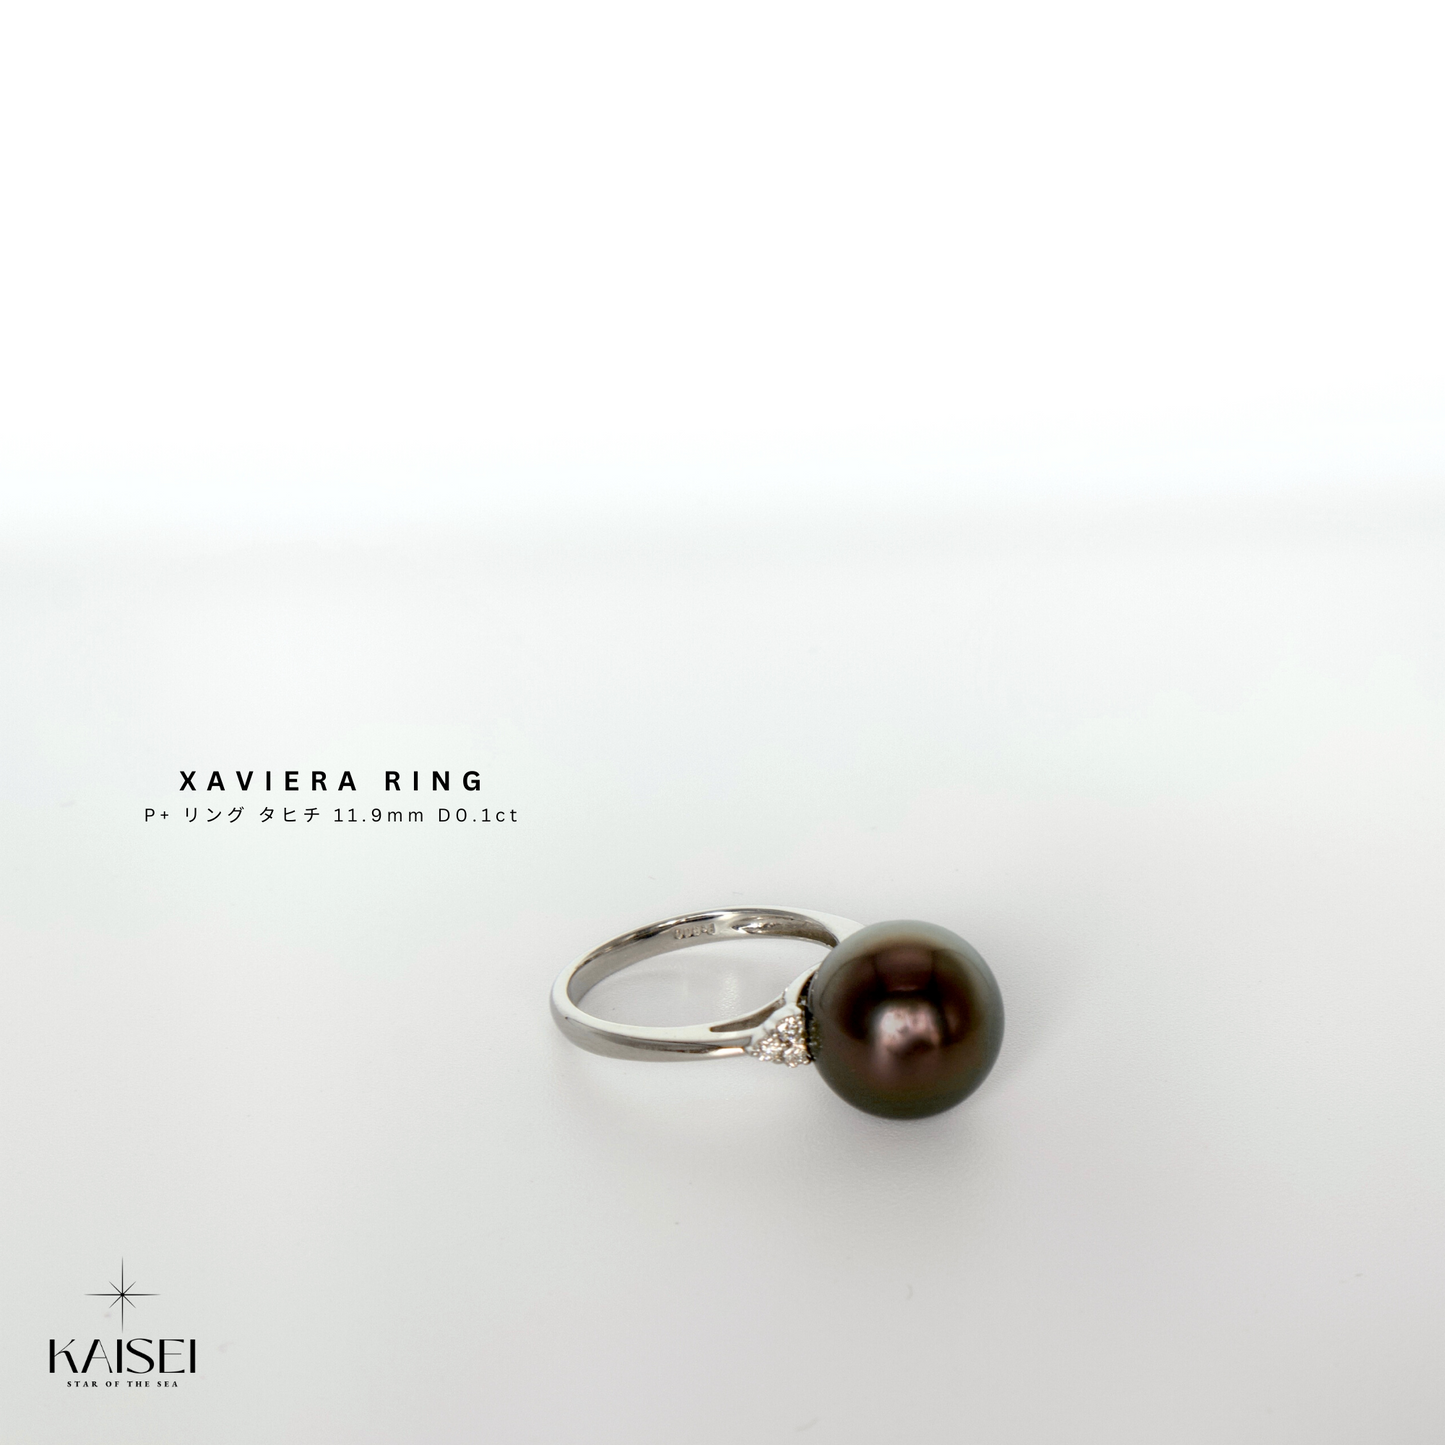 Kaisei Pearl - Xaviera Ring Platinum+ Black Tahitian Pearl Ring 0.1ct Diamonds